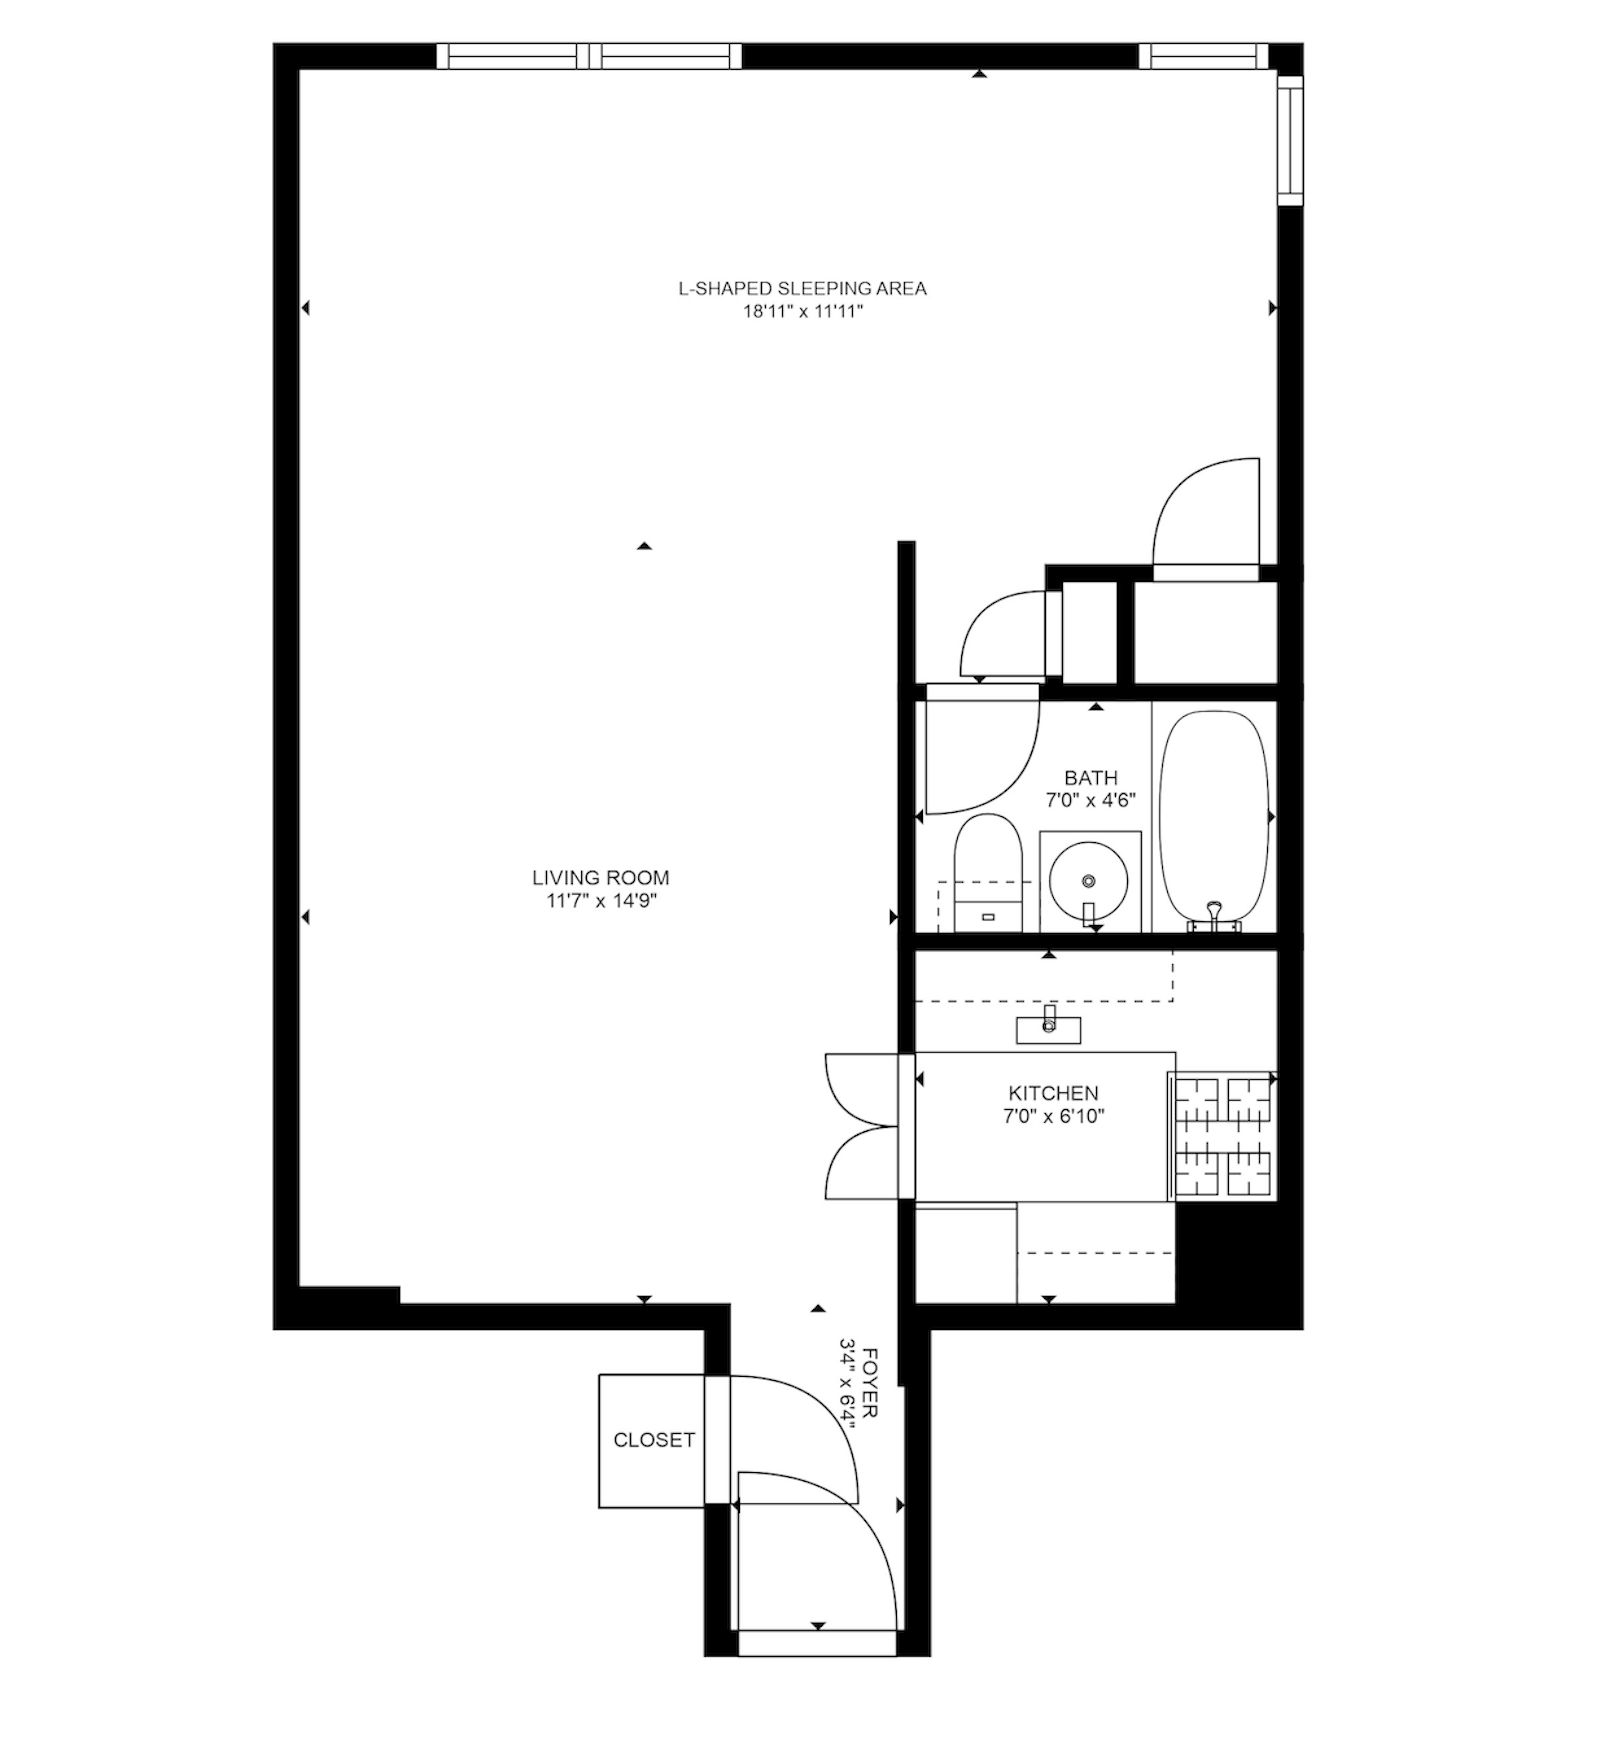 Floorplan for 34 -43 60th St, 5M